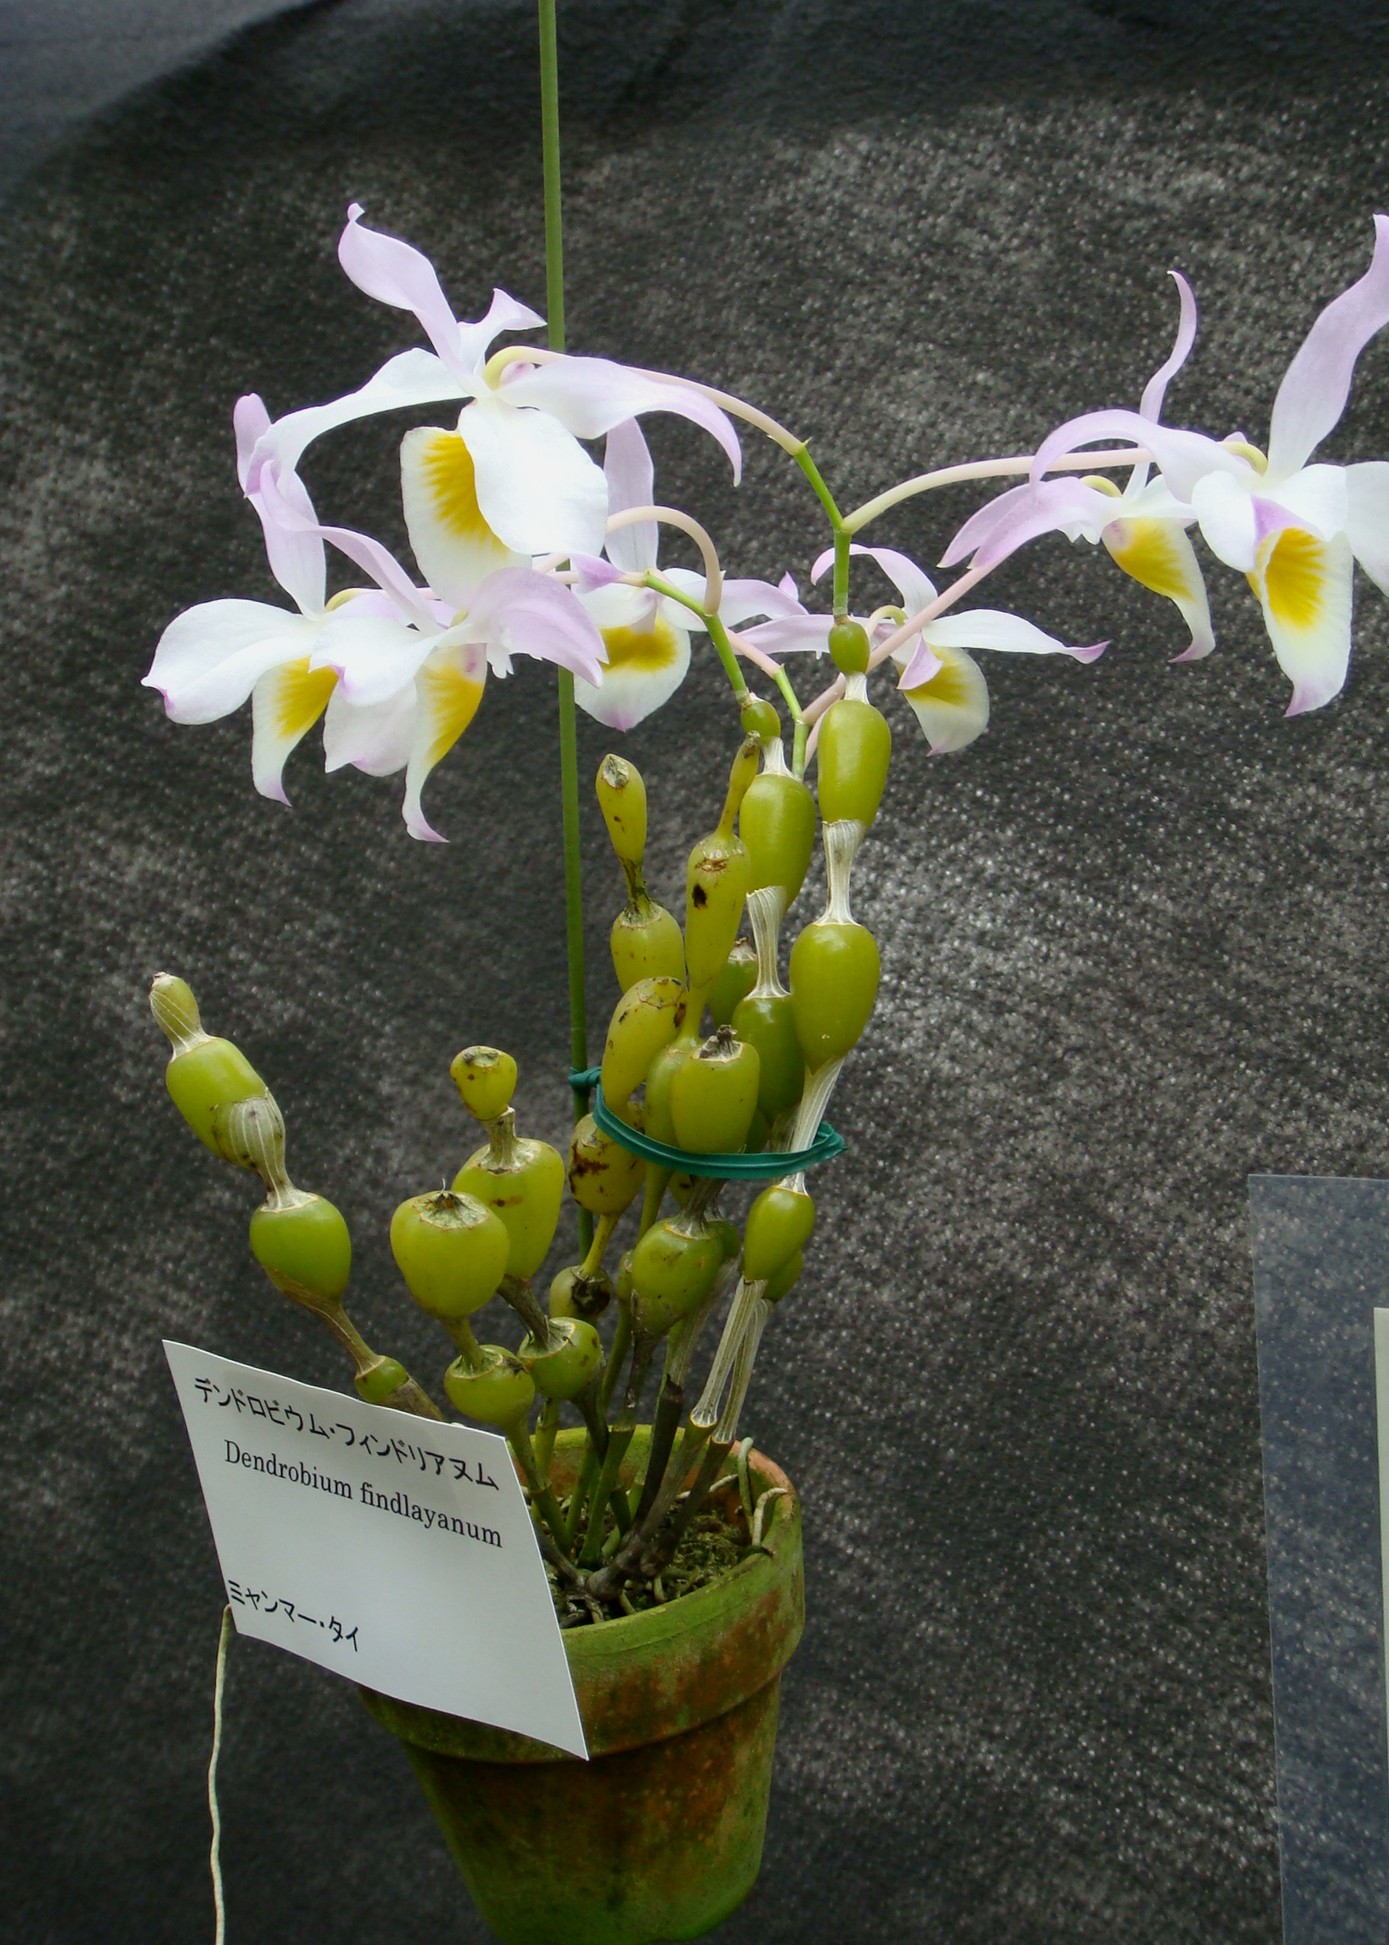 http://orchids.la.coocan.jp/Dendrobium/Dendrobium%20findlayanum/DSC06644.JPG